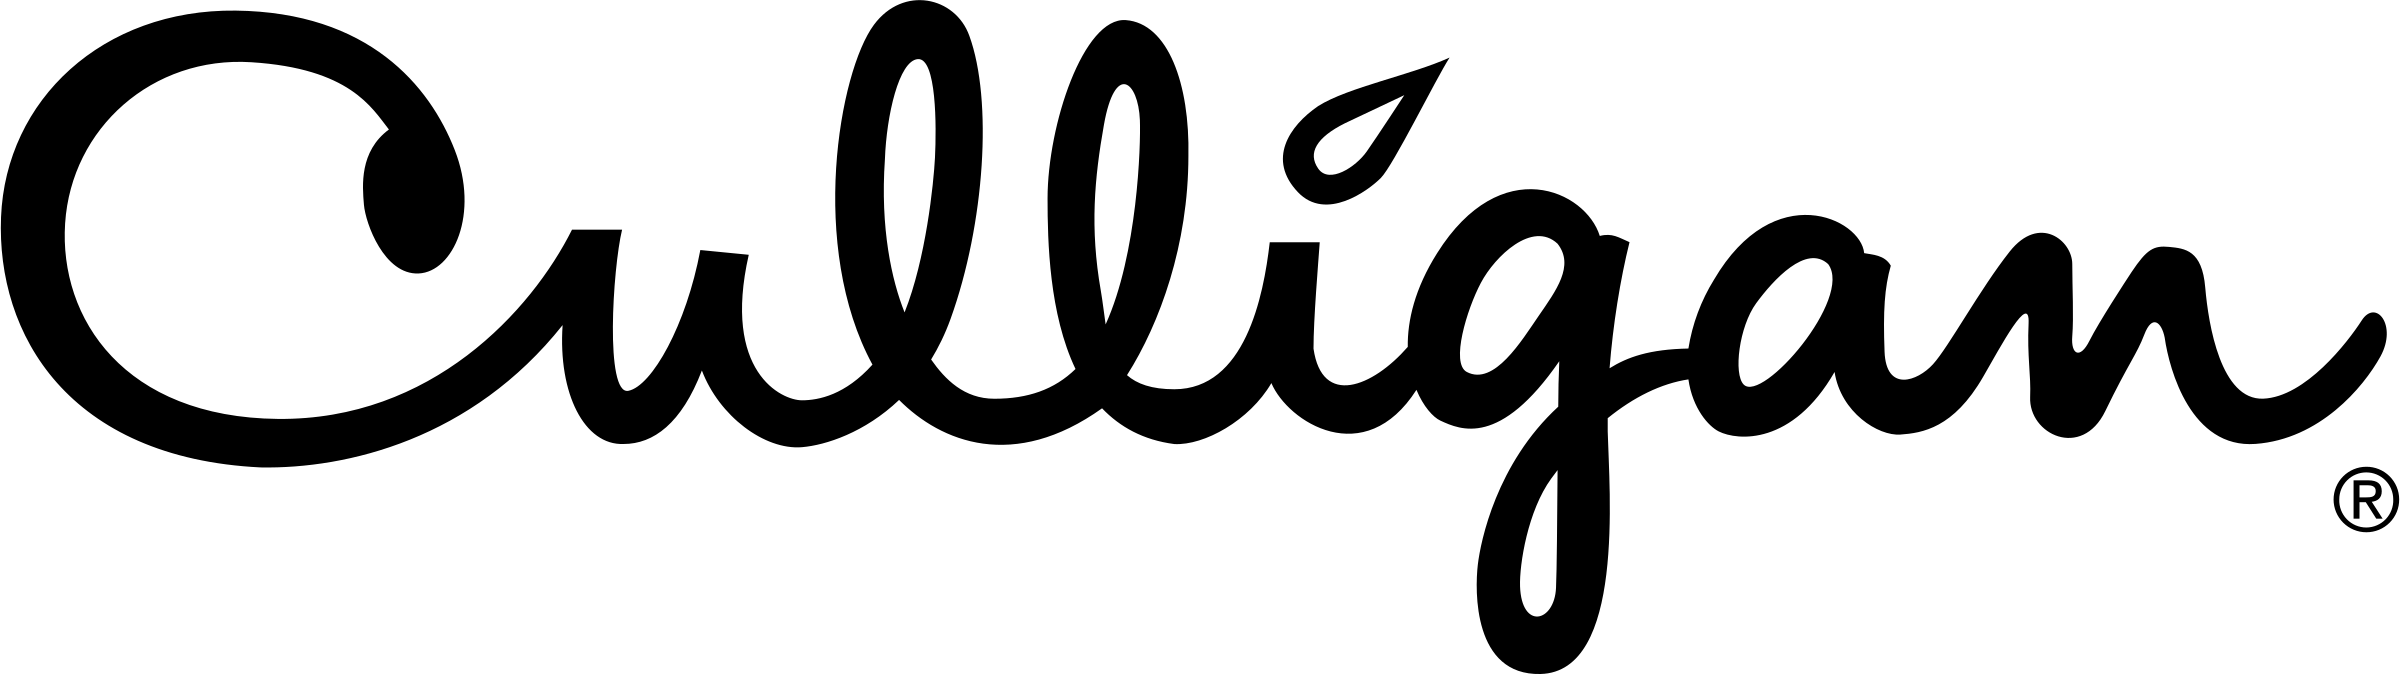 culligan-water-logo-black-and-white